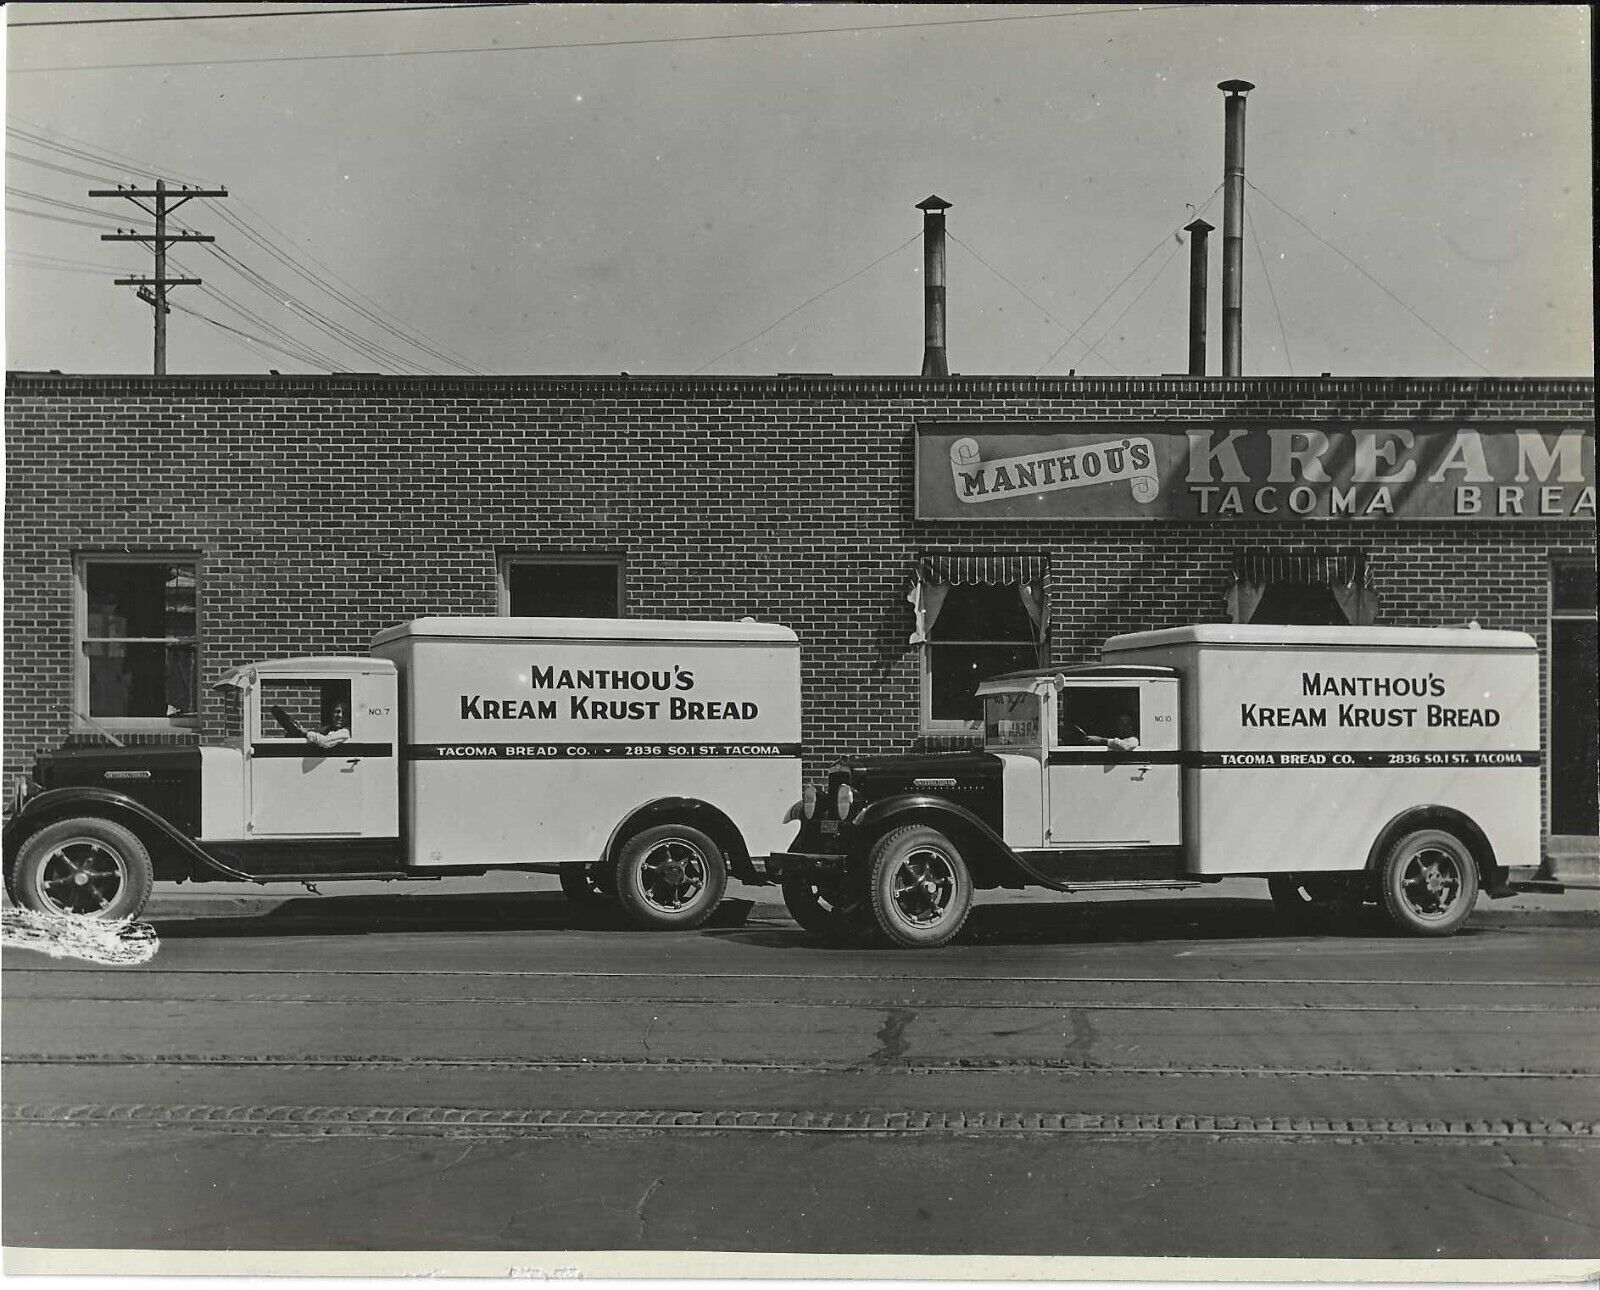 Tacoma Washington - Manthous's Bread, photo of trucks